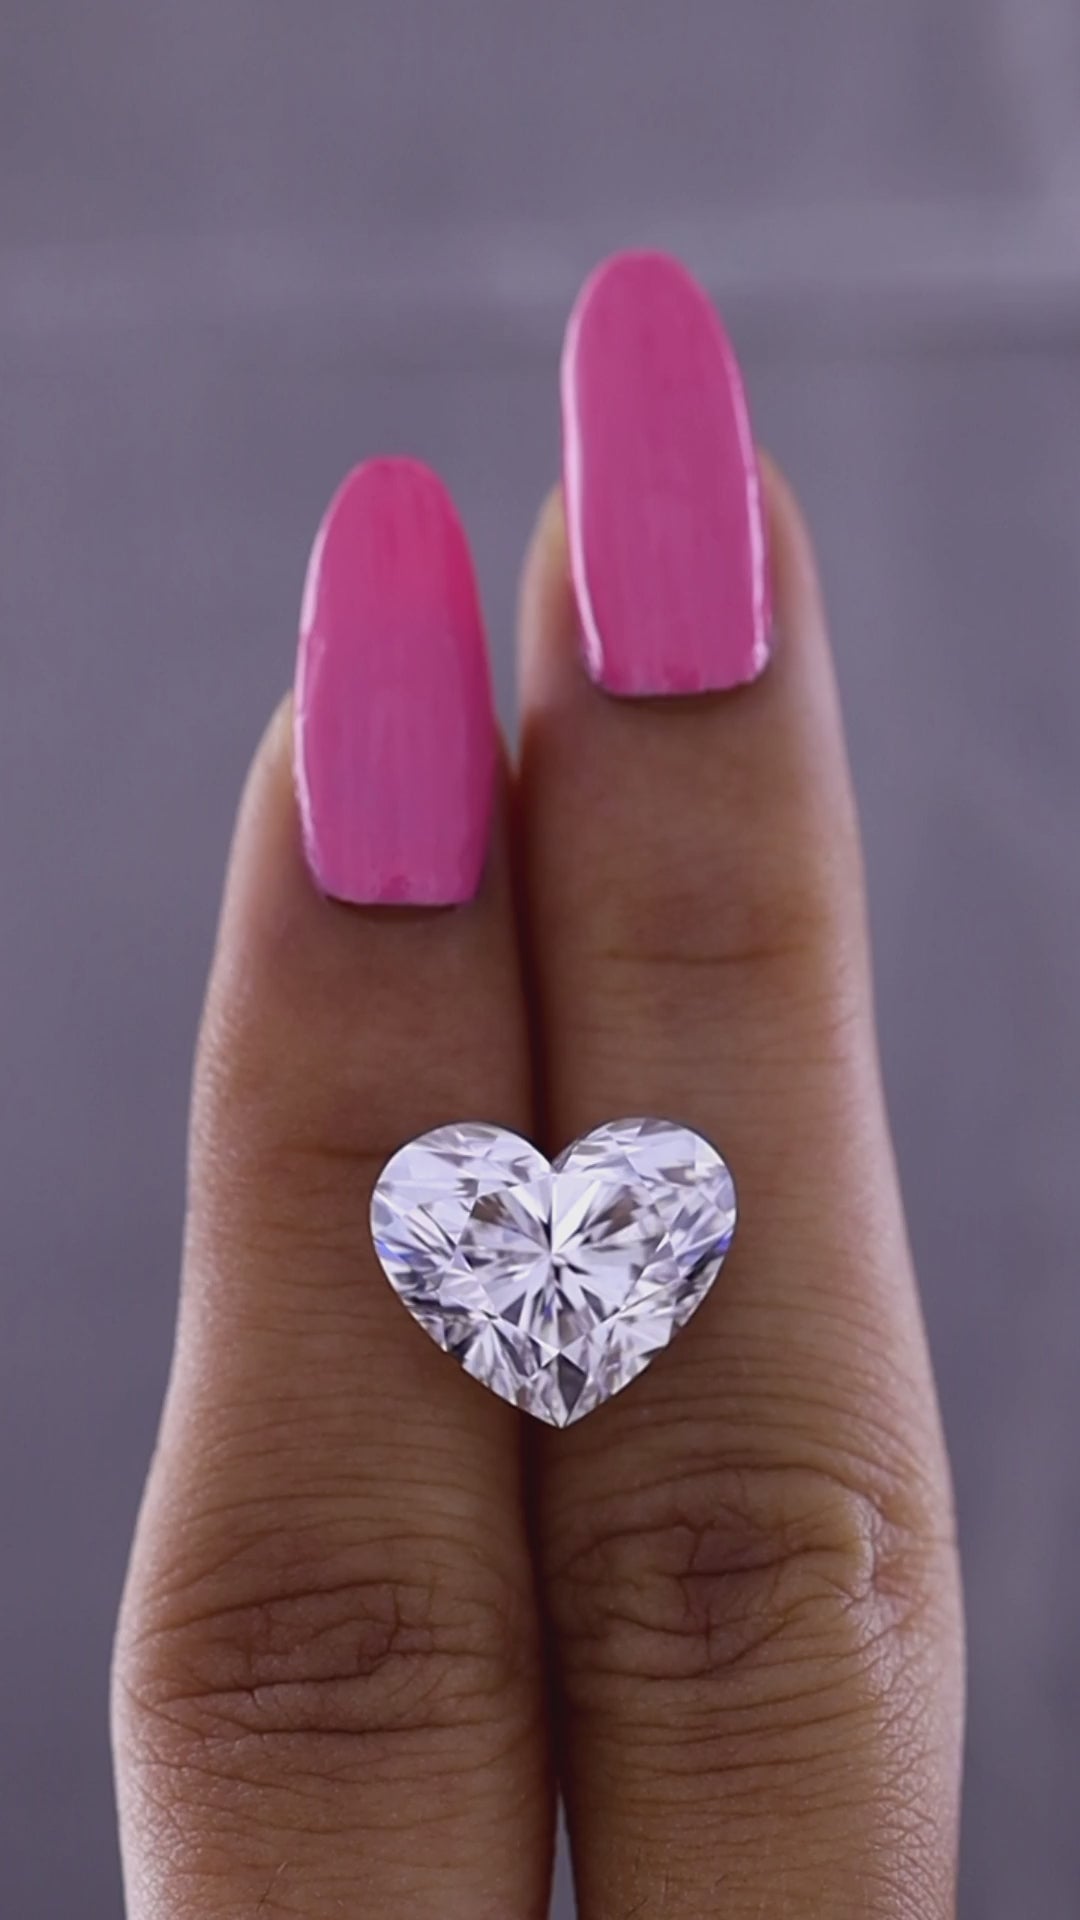 8.01 Carat Heart Brilliant Diamond | Atelier de Joyaux™ Geneva